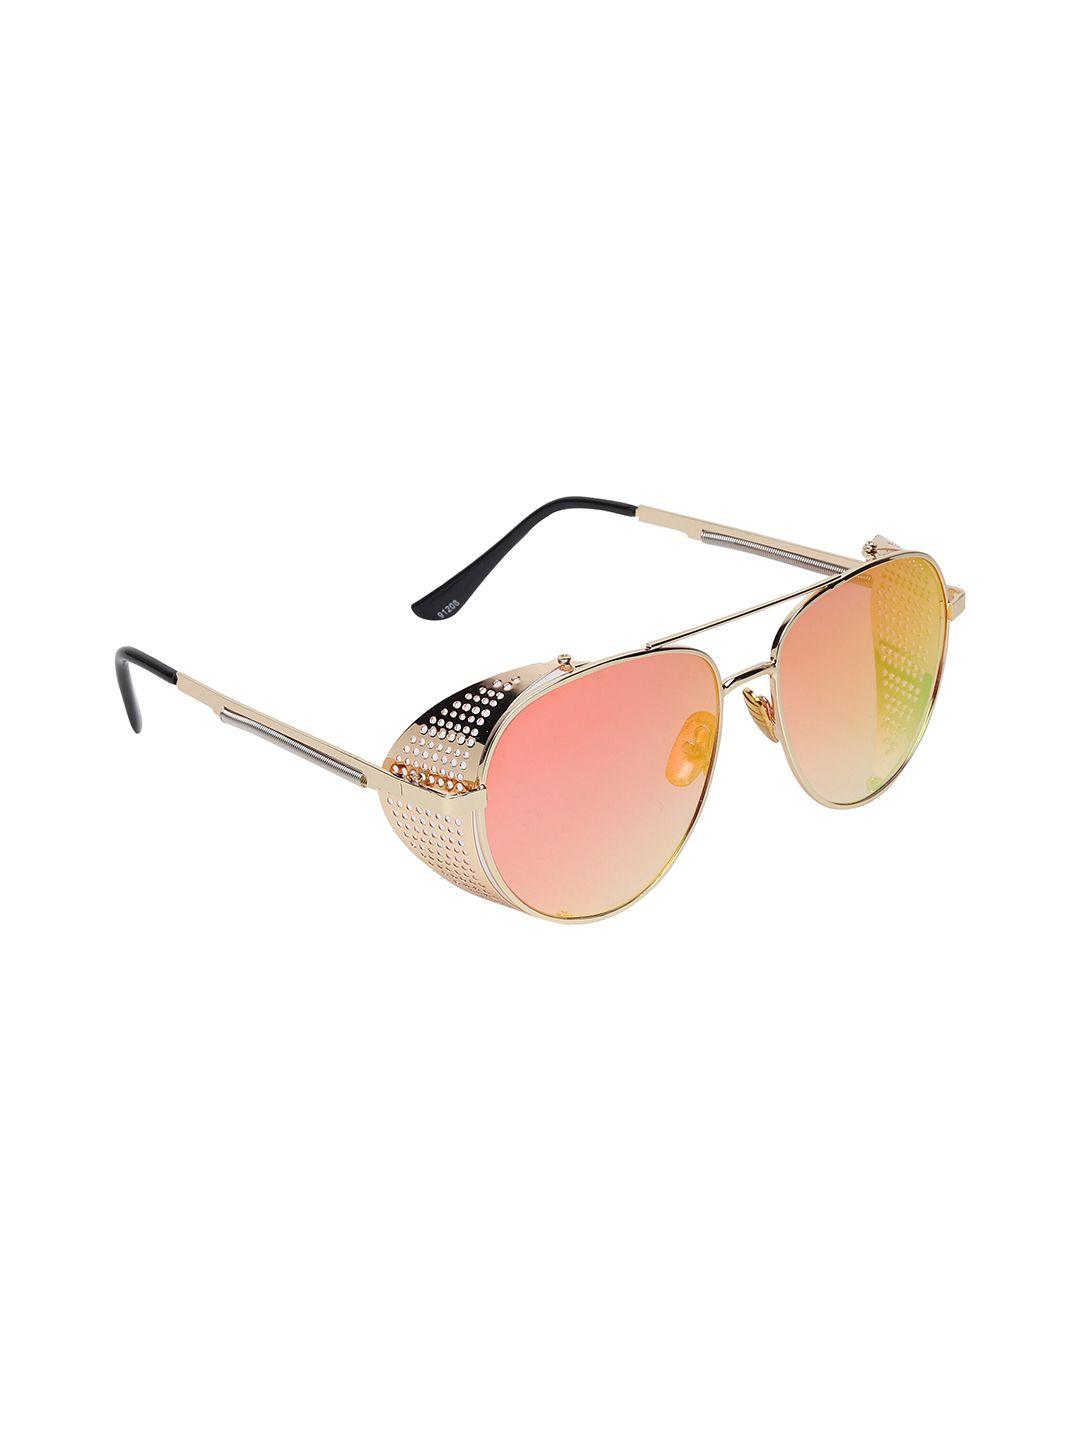 swiss design lens & aviator sunglasses with uv protected lens